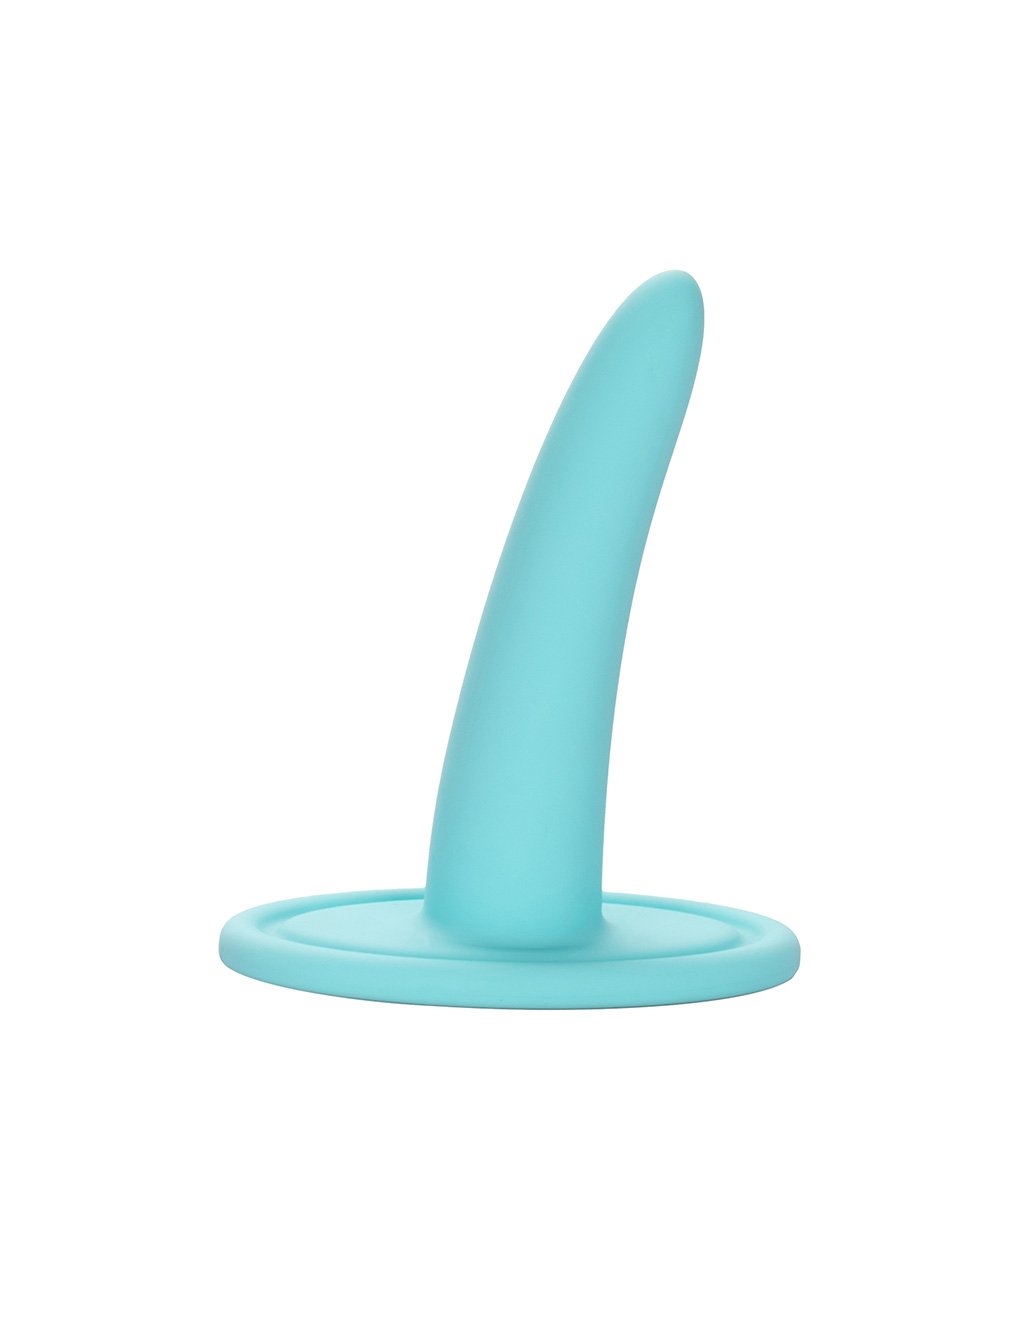 She-Ology 5 Piece Vaginal Dilator Set- Medium blue